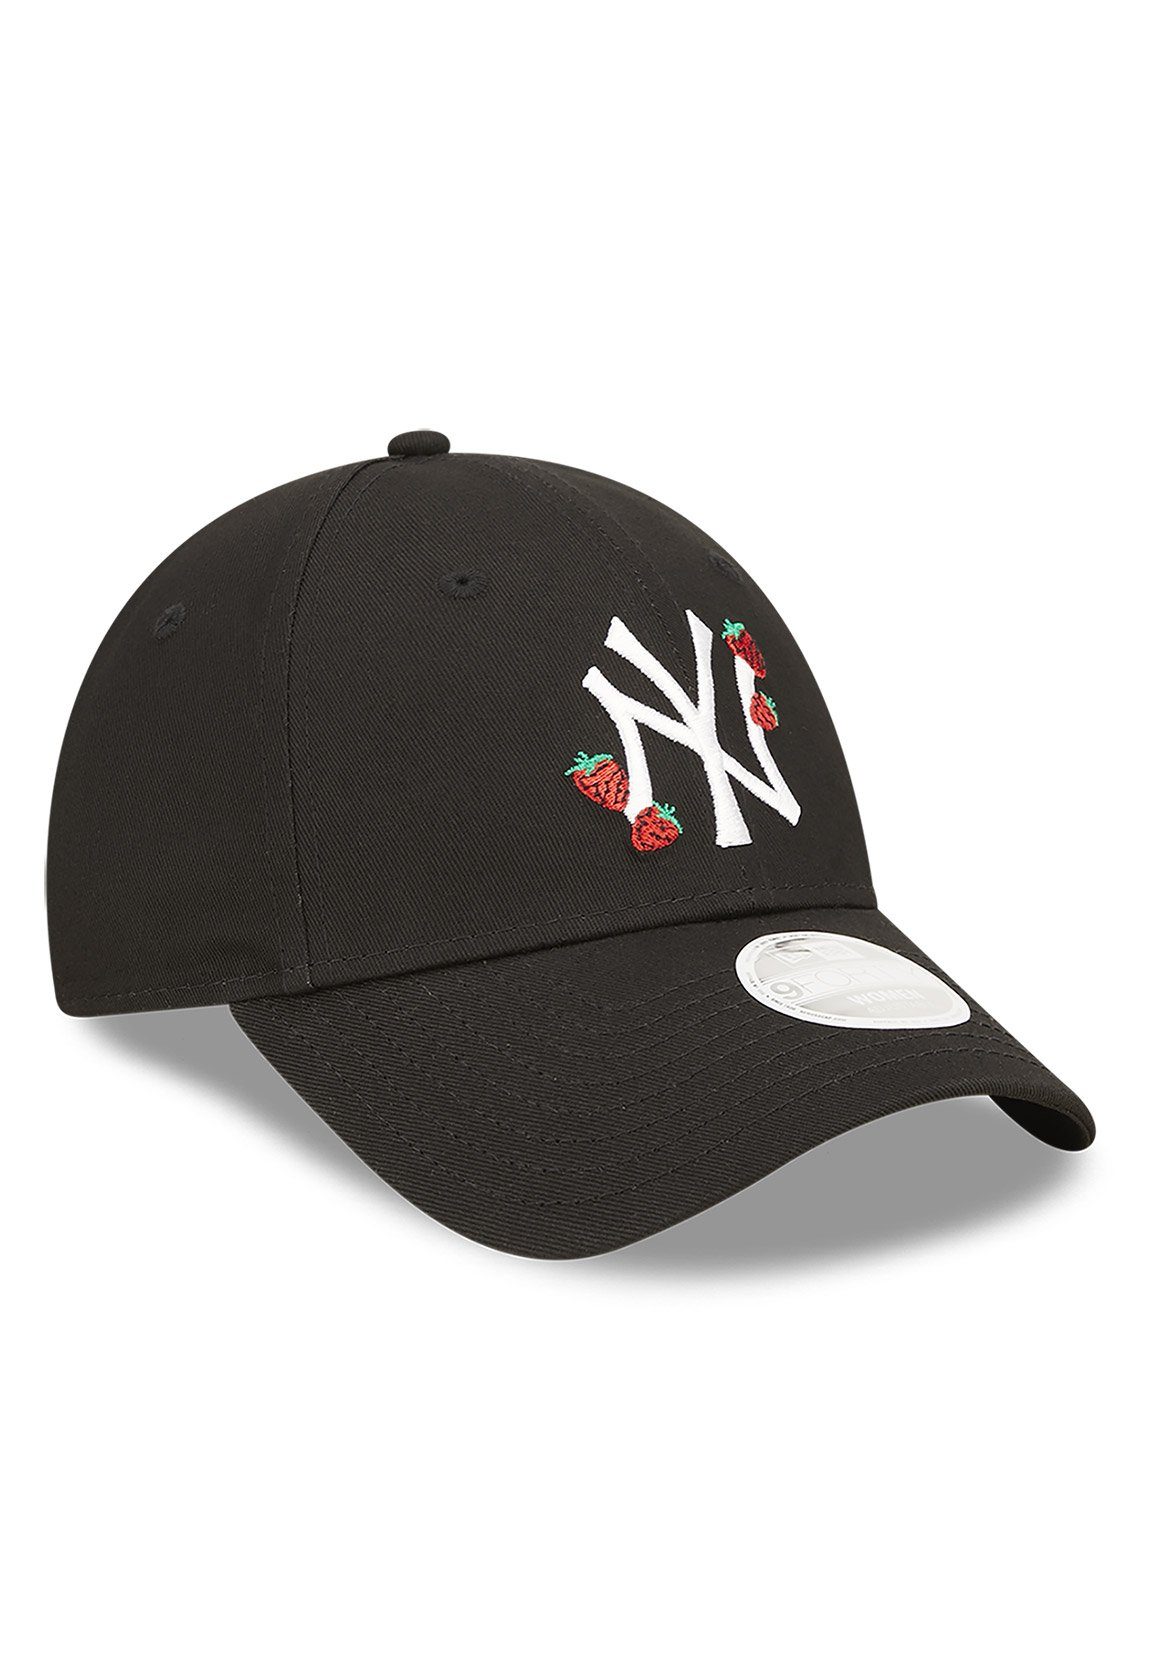 Wmns YANKEES New Adjustable Damen Baseball Cap Cap Era Era NY New Strawberry 9Forty